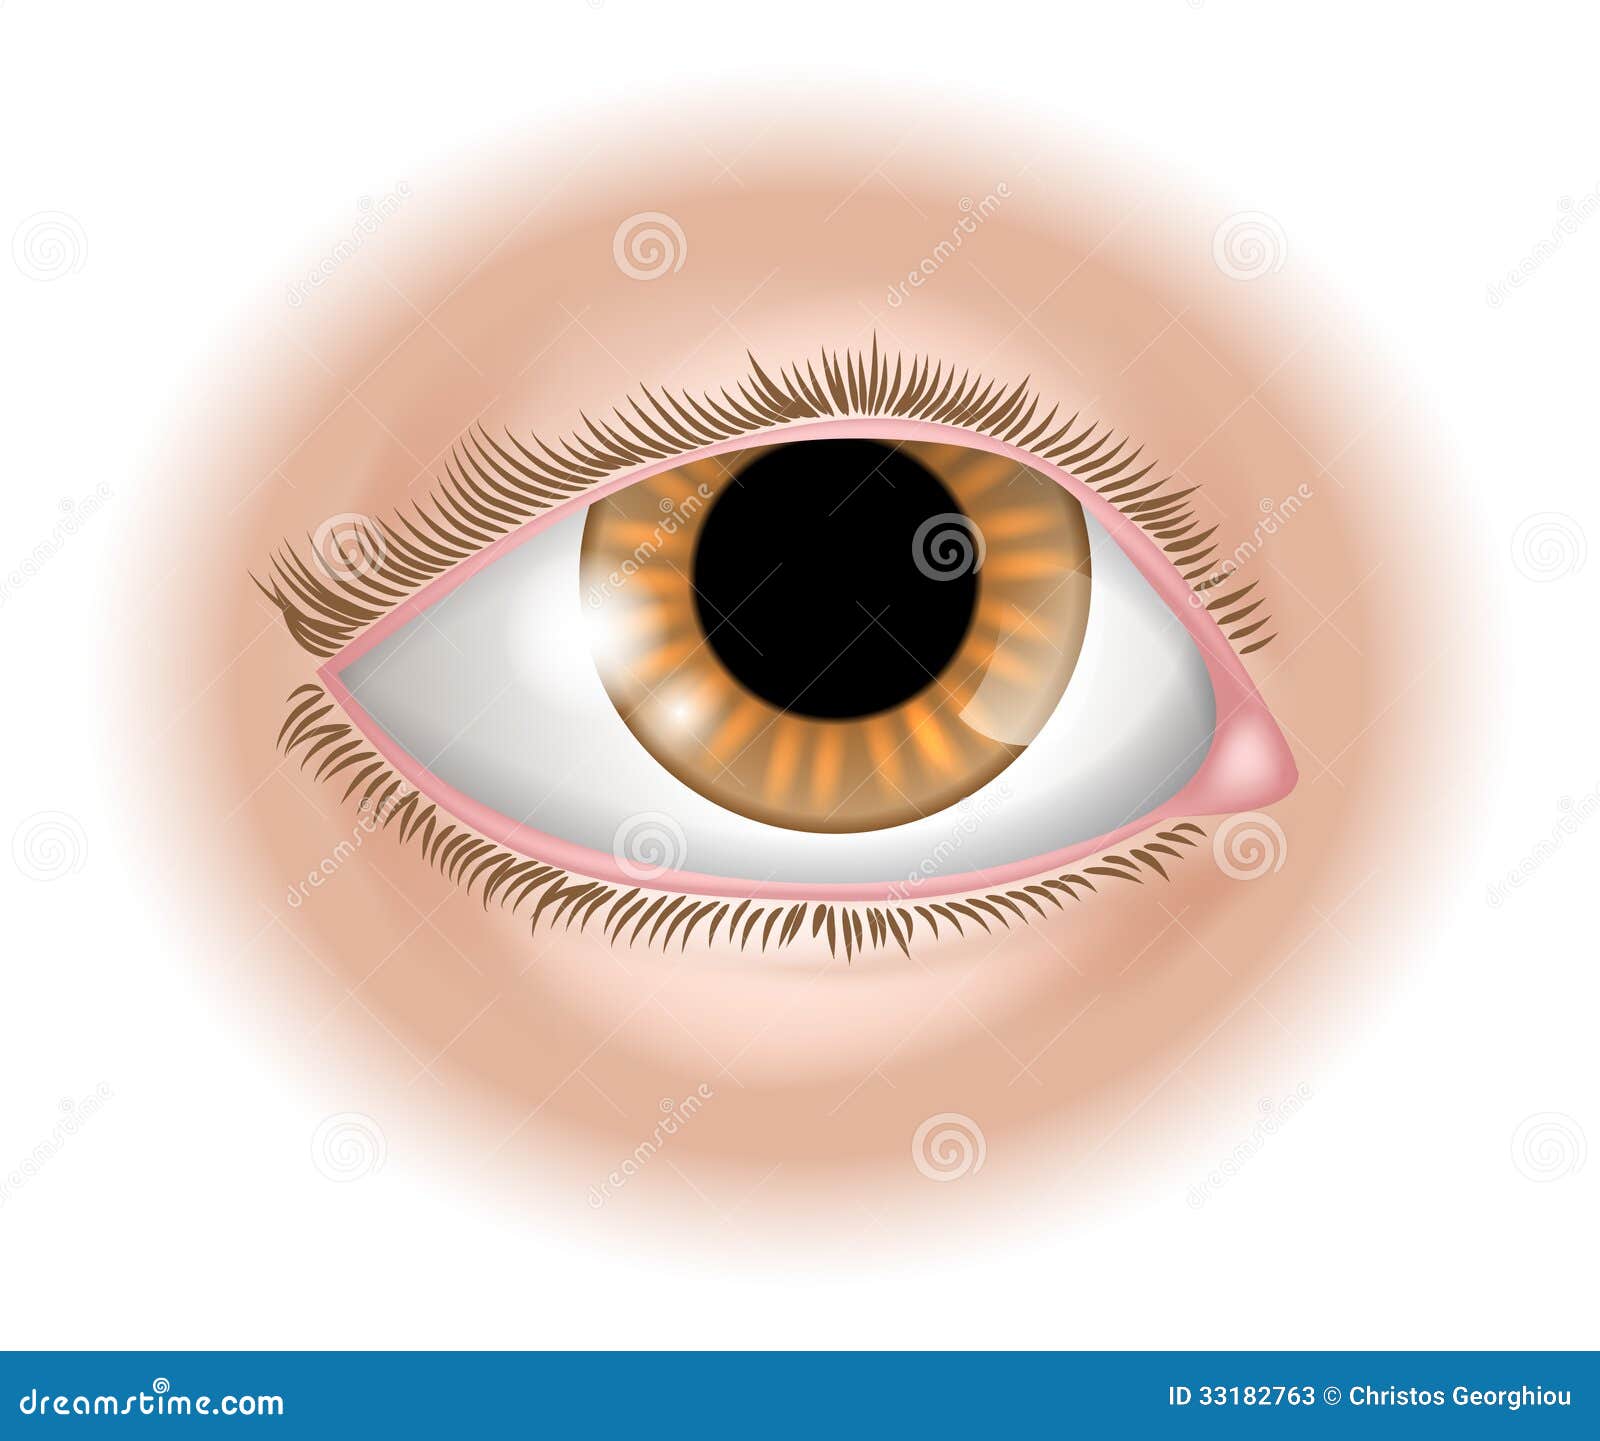 Eye Body Part Illustration Stock Photos - Image: 33182763